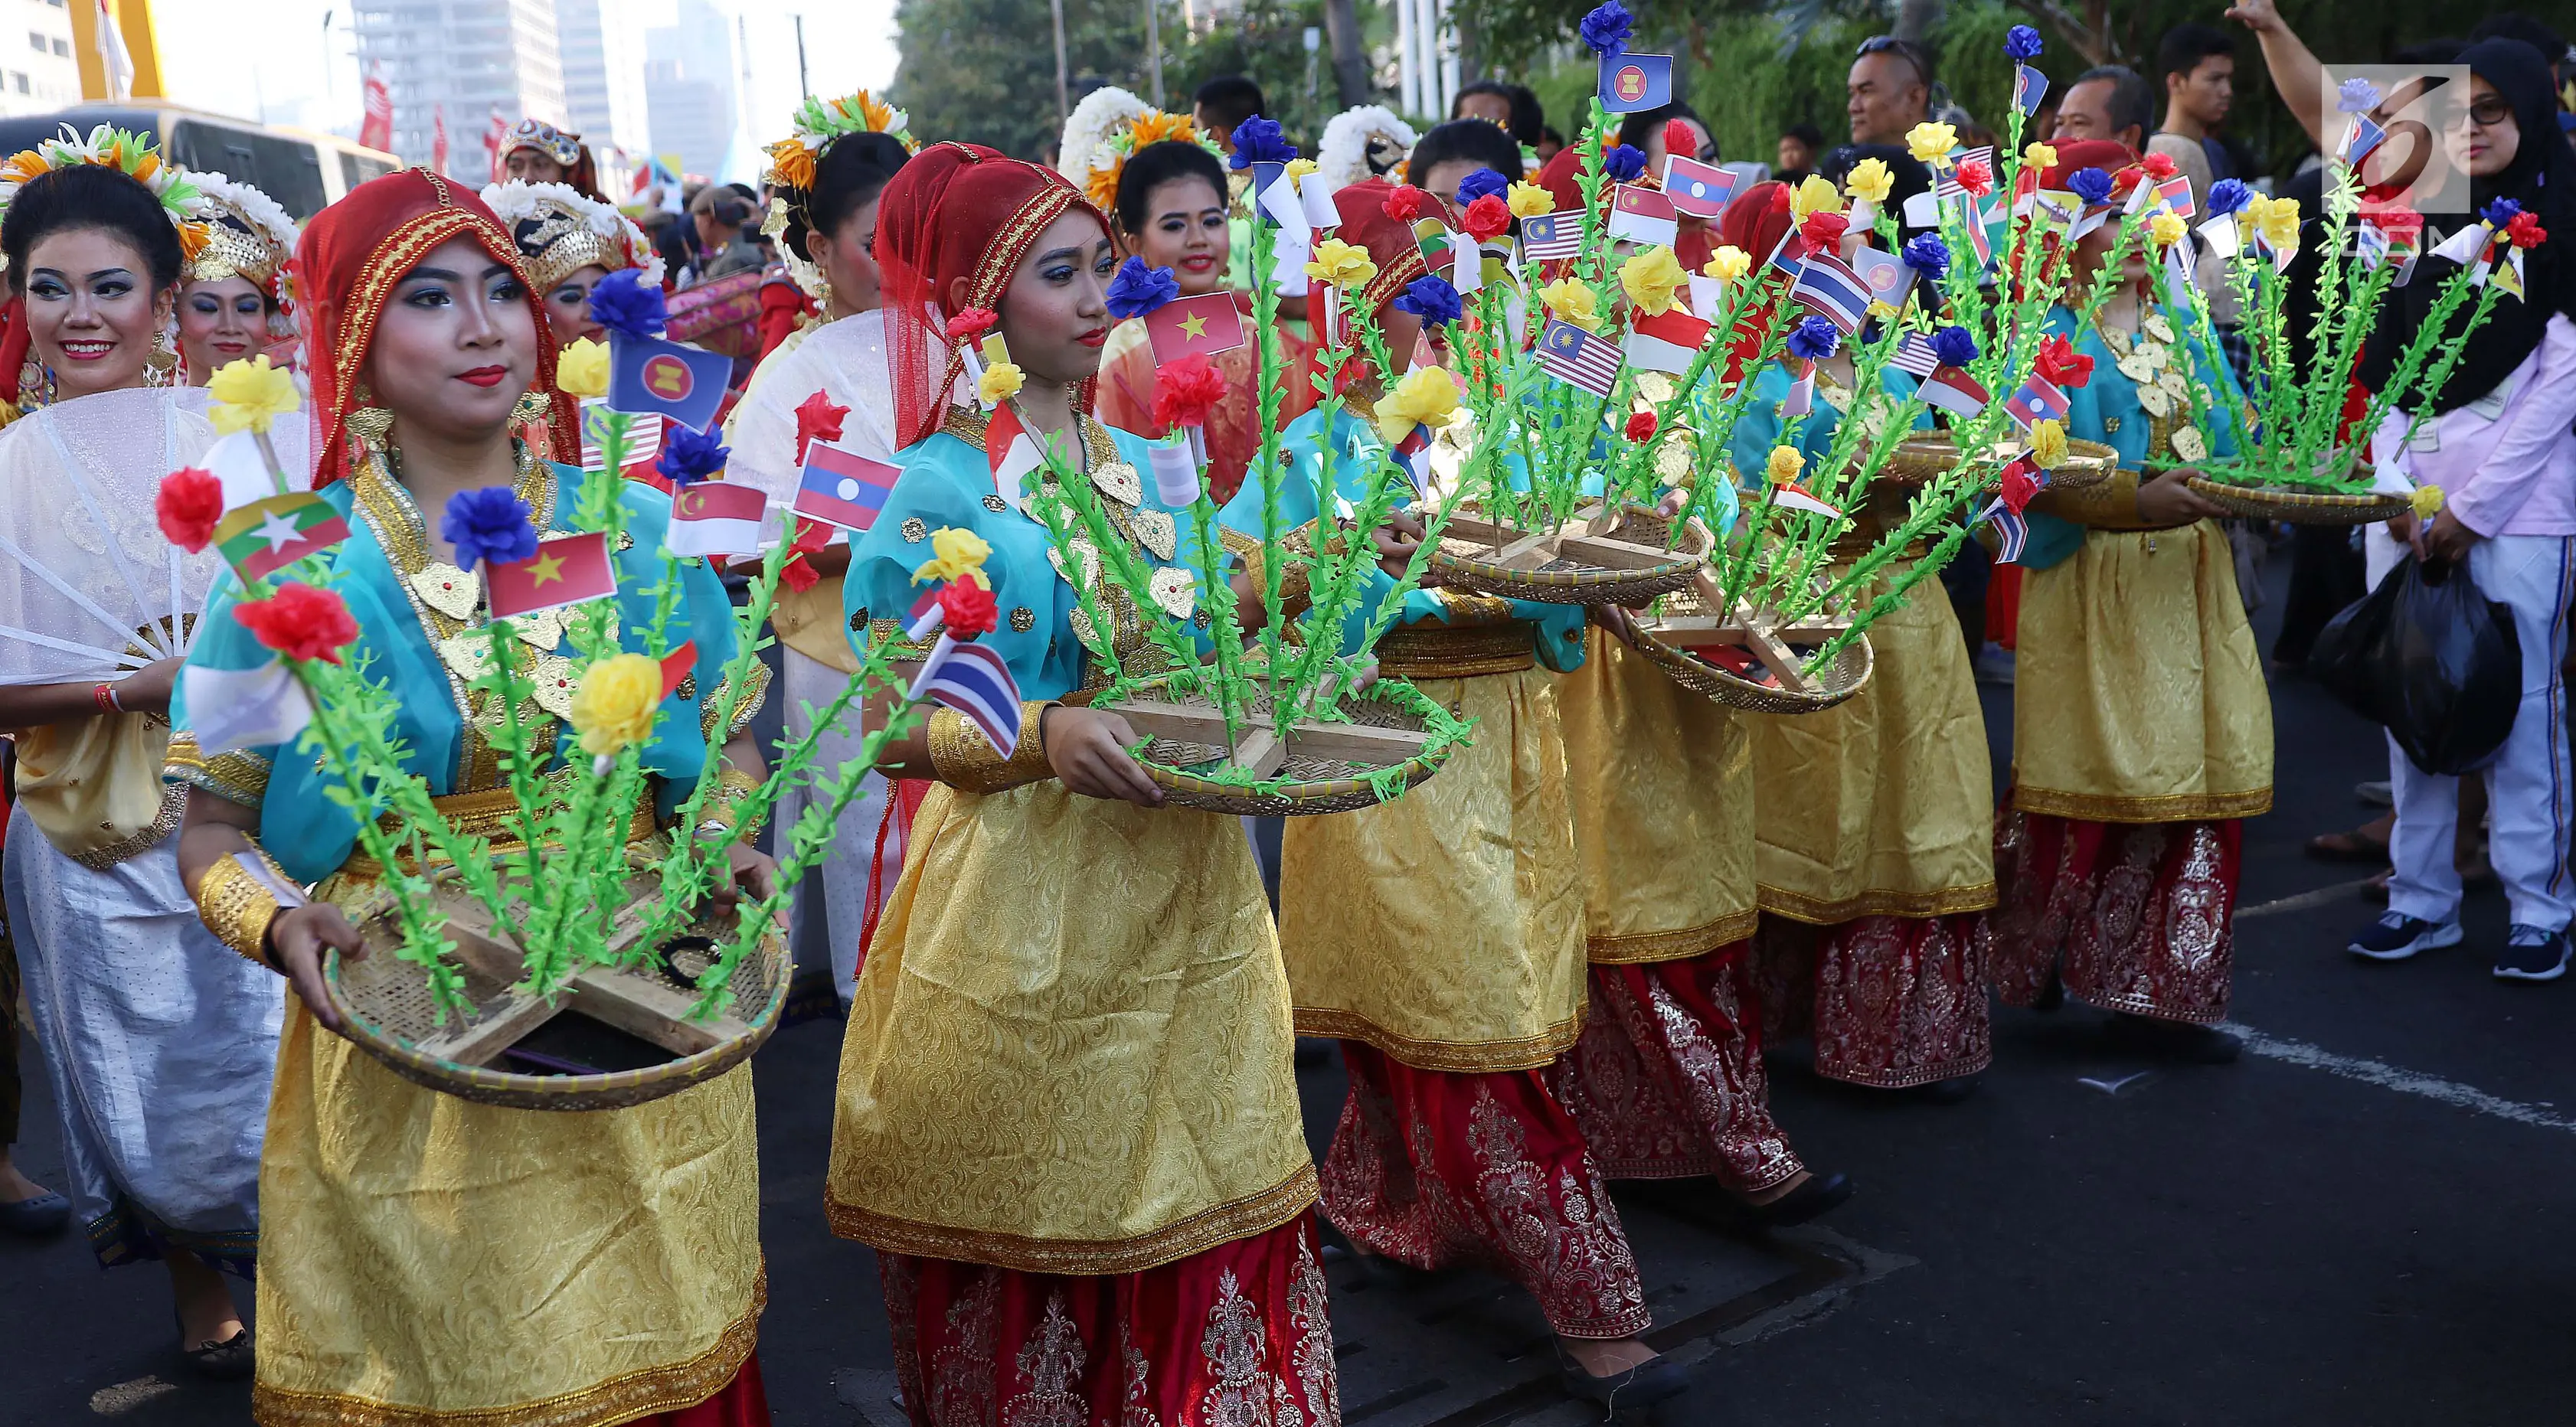 Peserta mengenakan baju adat membawa bendera negara anggota ASEAN saat parade ASEAN 50 Tahun di Jakarta, Minggu (27/8). Parade itu diikuti oleh seluruh negara yang tergabung dalam ASEAN. (Liputan6.com/Angga Yuniar)